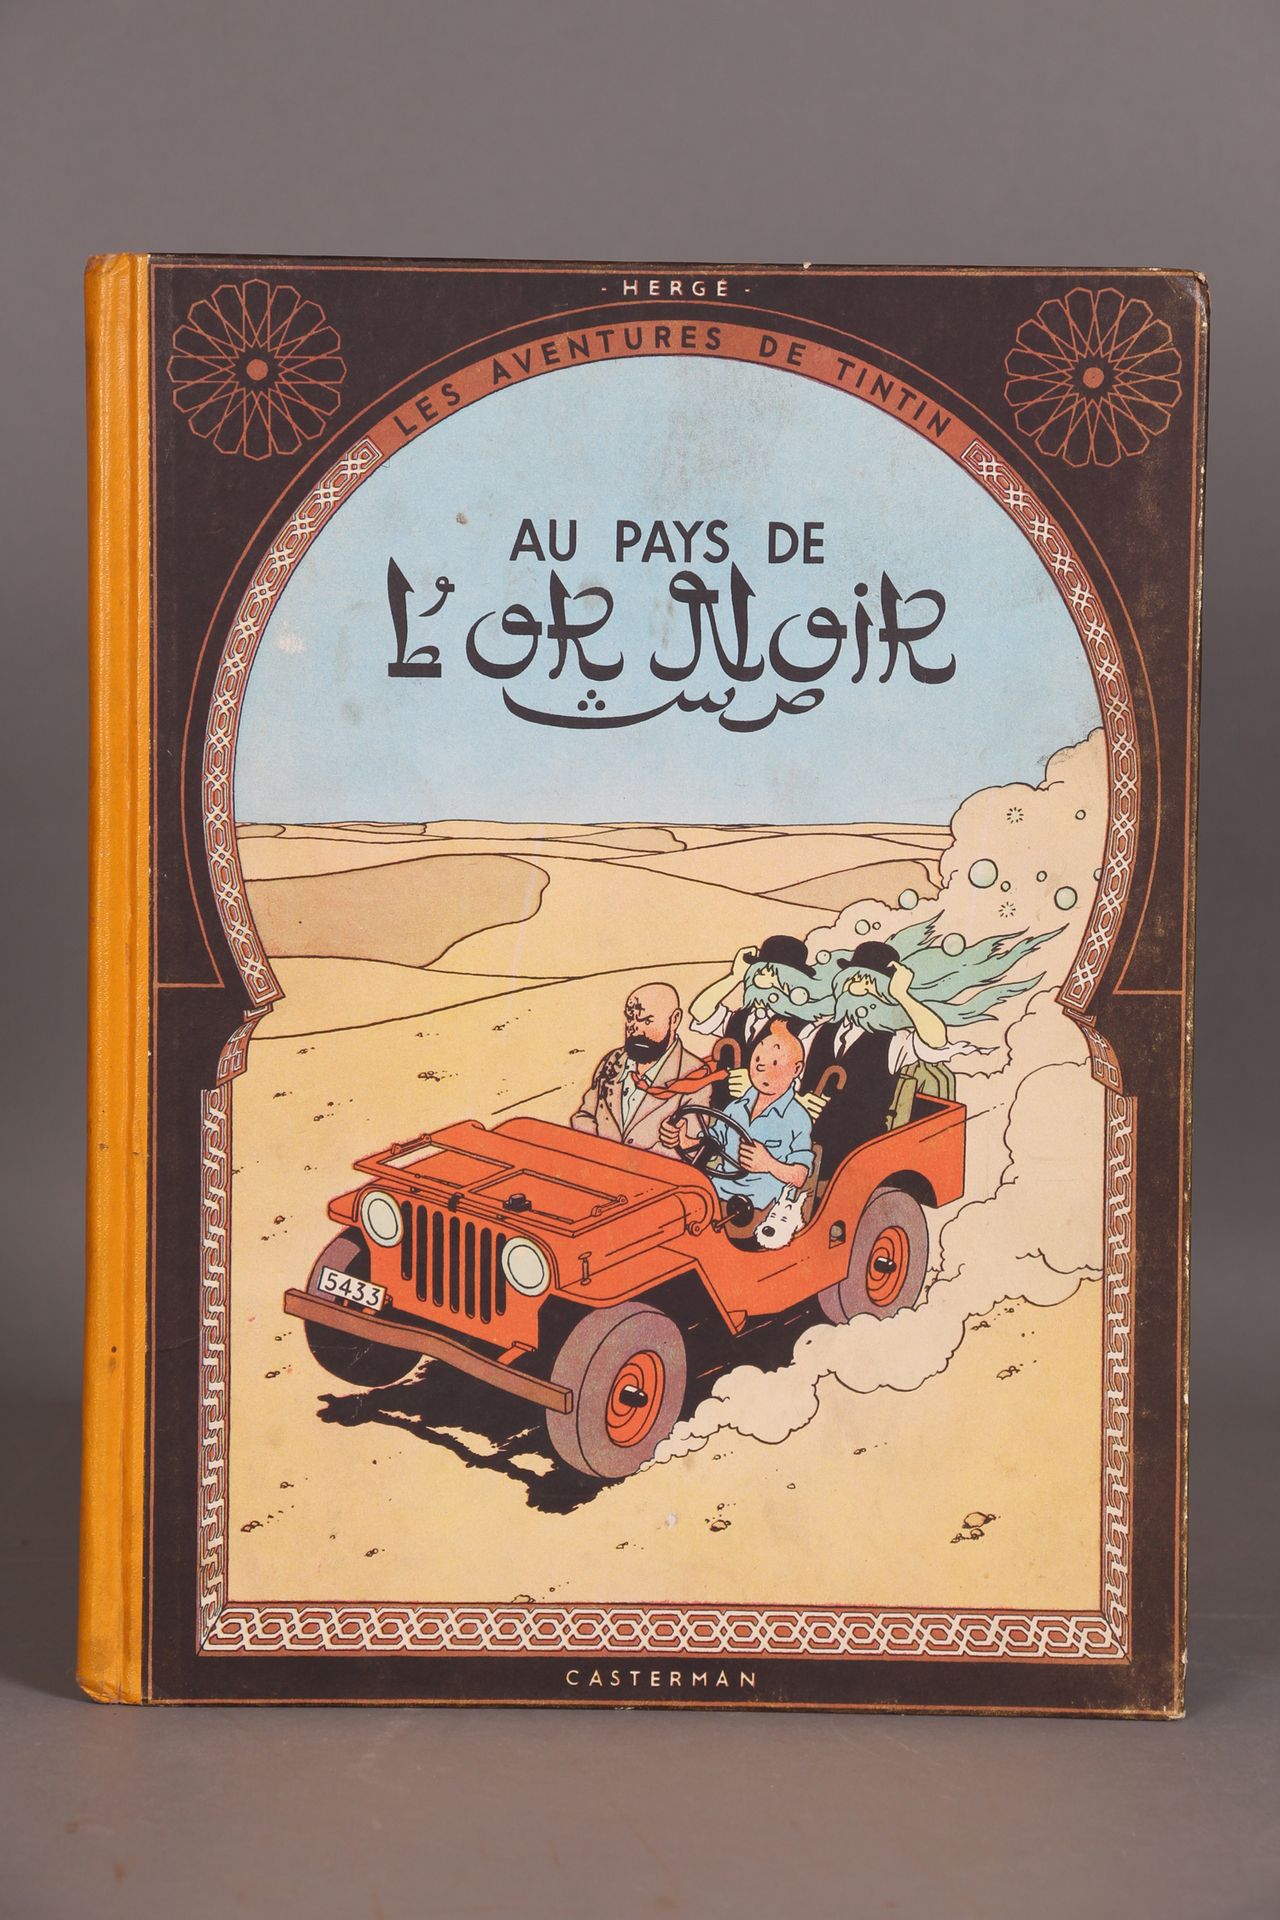 [TINTIN]. HERGÉ. "Tintin au pays de l'or noir" Casterman, 1950. Primera edición.&hellip;